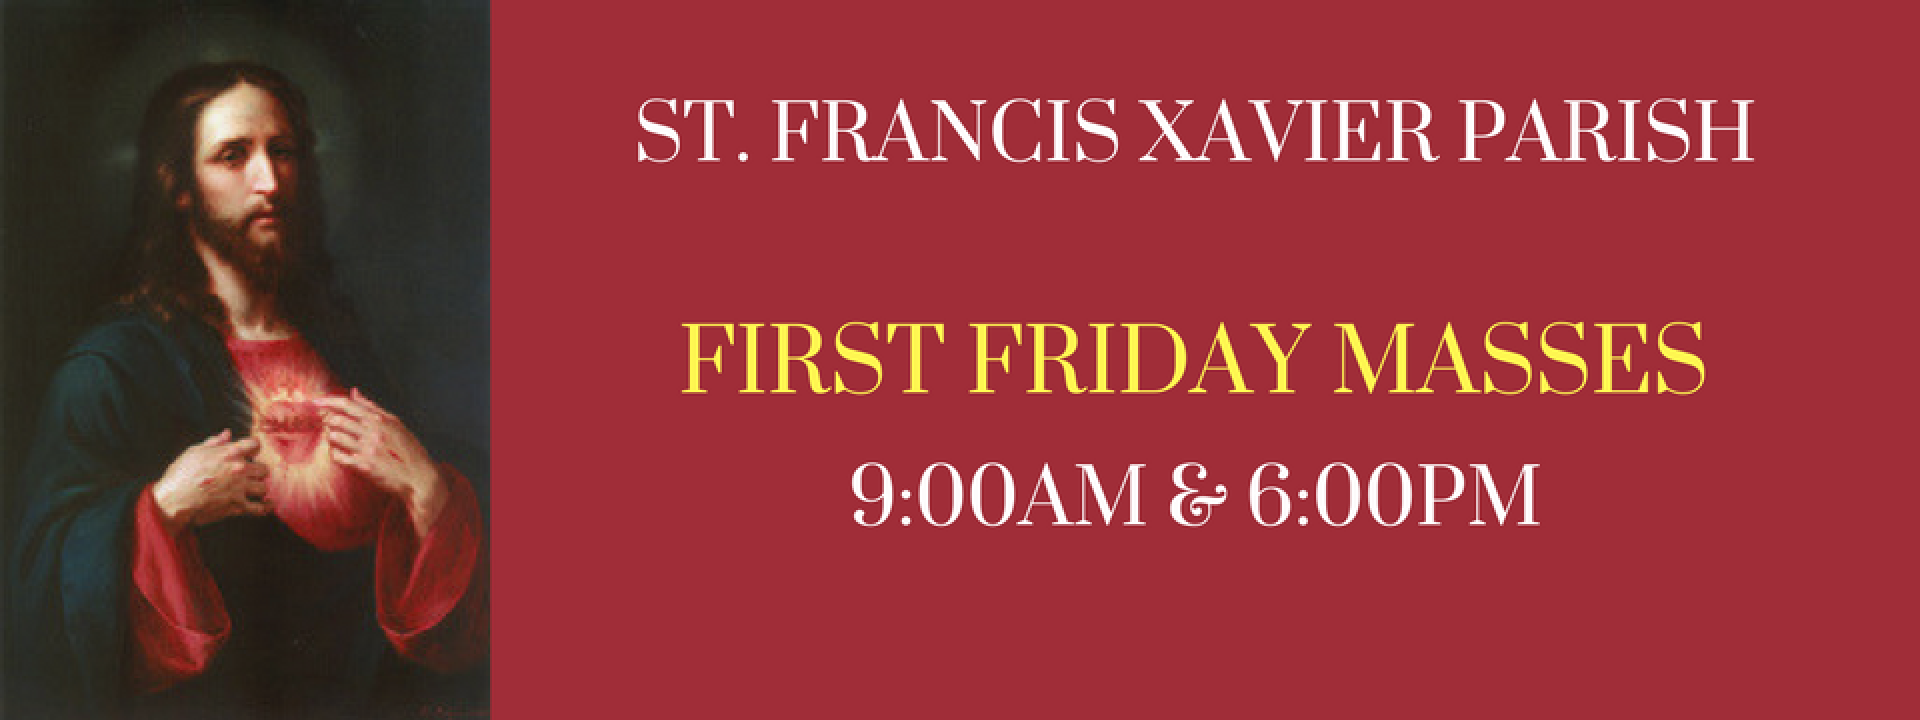 Saint Francis Xavier Parish Catholic Church in Acushnet, Massachusetts